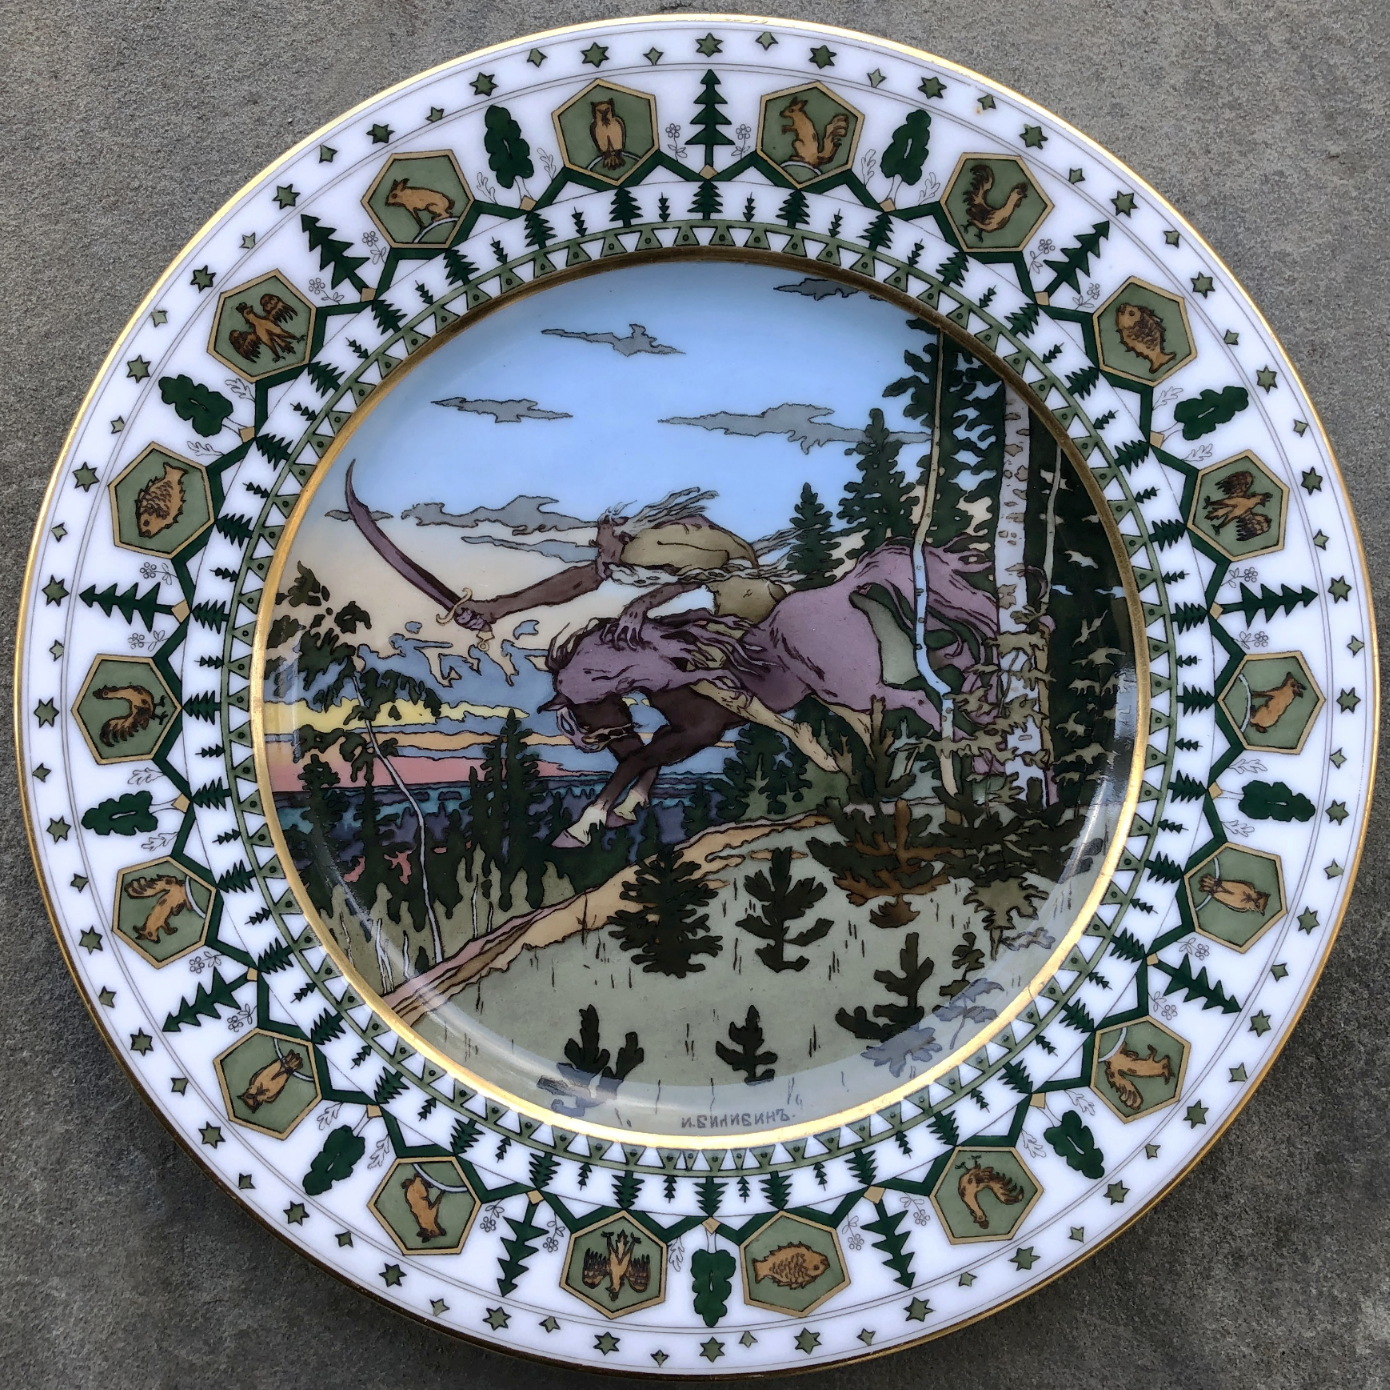 Kornilov Bilibin plate #7 - Koschei the Immortal on horseback chasing after Prince Ivan. Illustration for the Russian fairy tale "Marya Morevna"